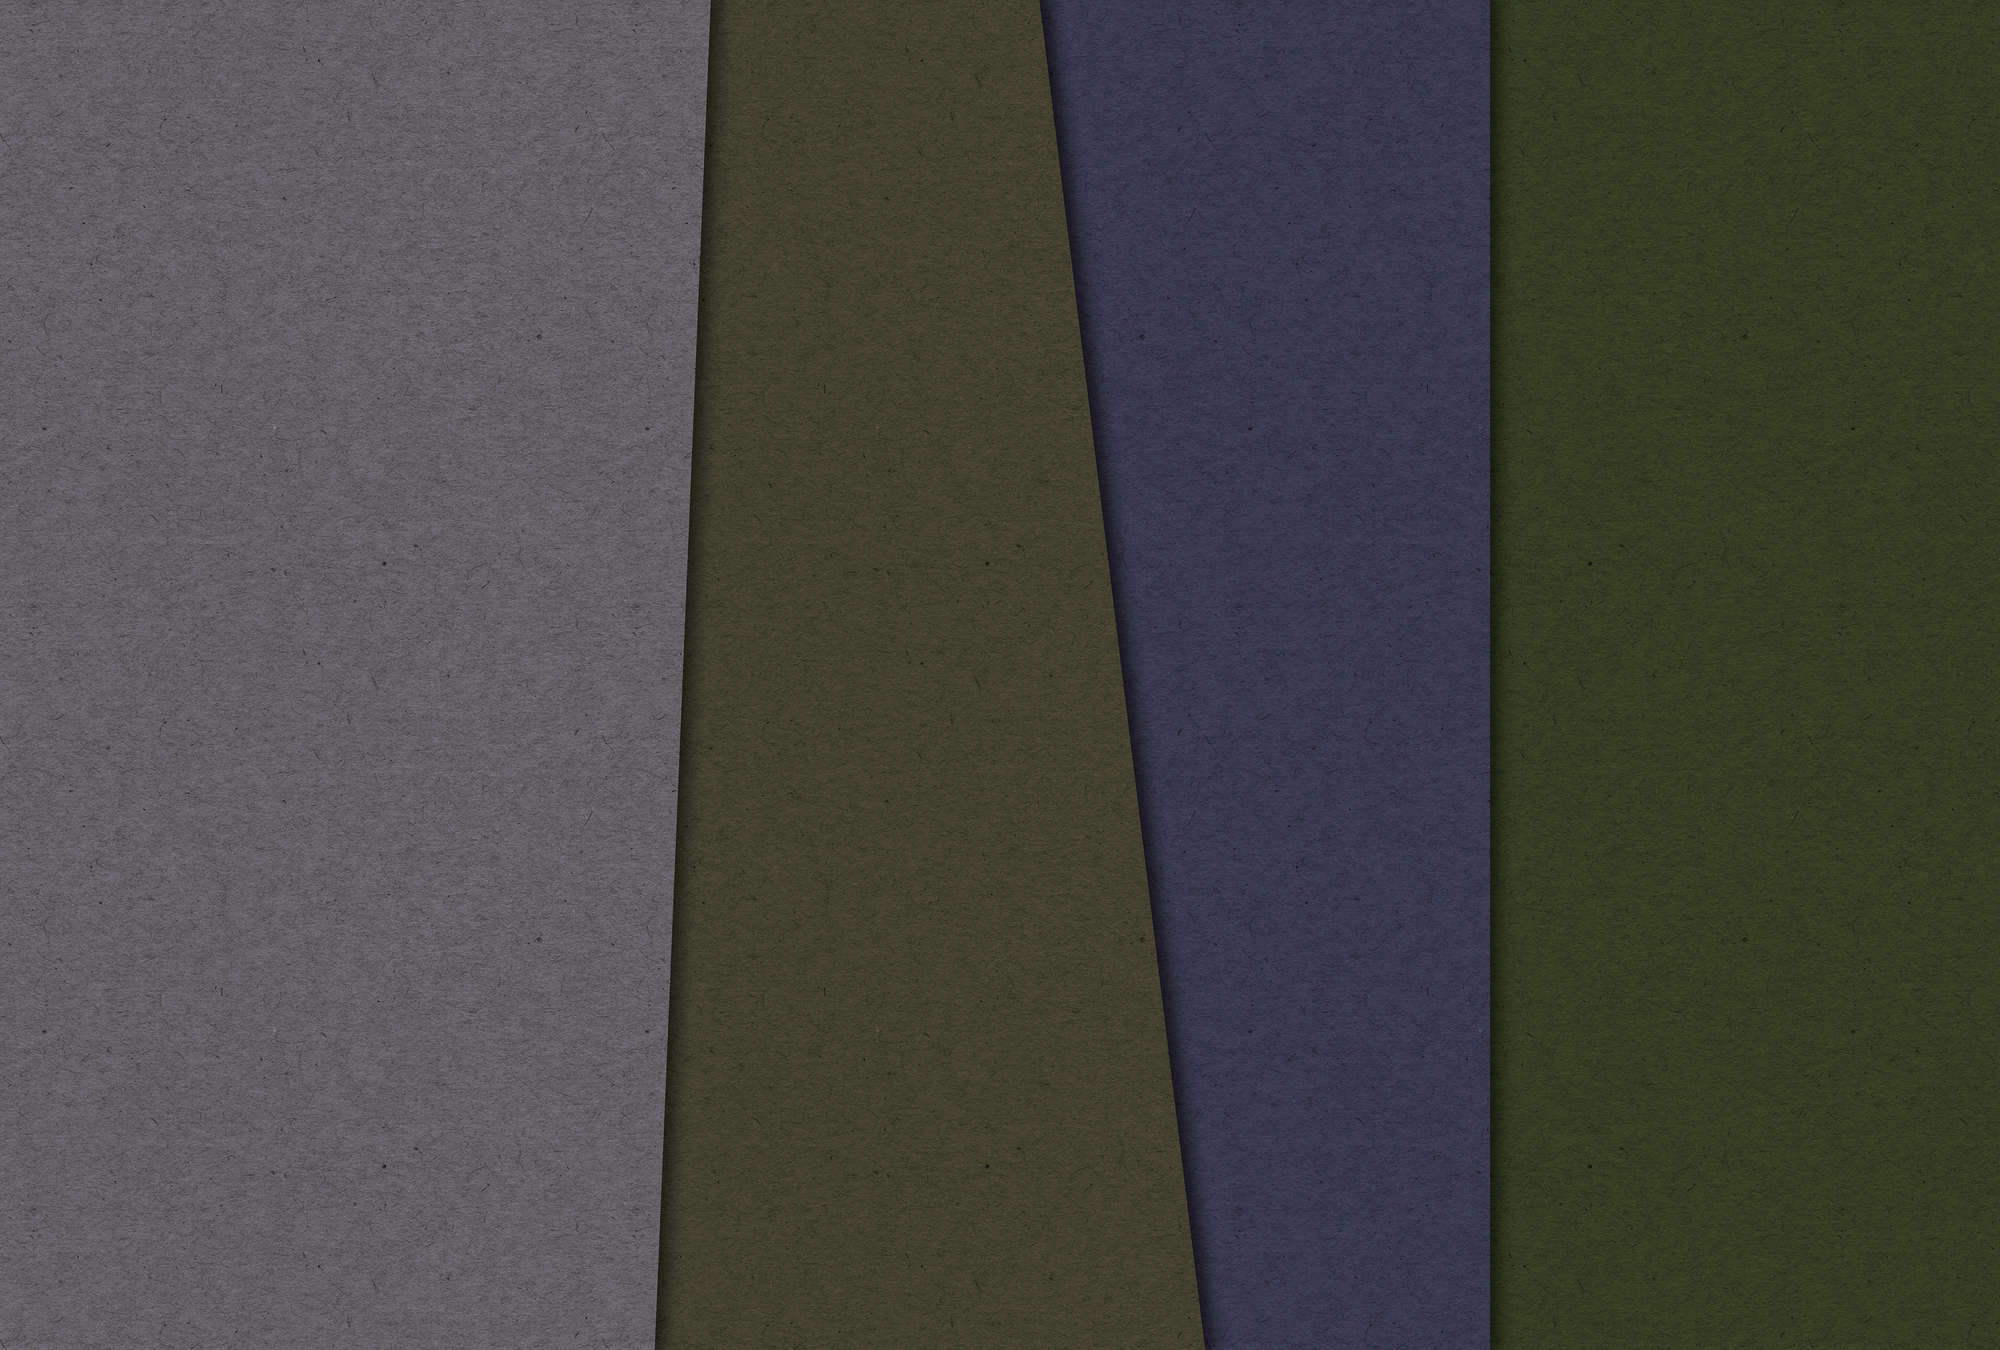             Layered Cardboard 3 - Photo wallpaper minimalist & abstract- cardboard structure - Green, Purple | Premium smooth fleece
        